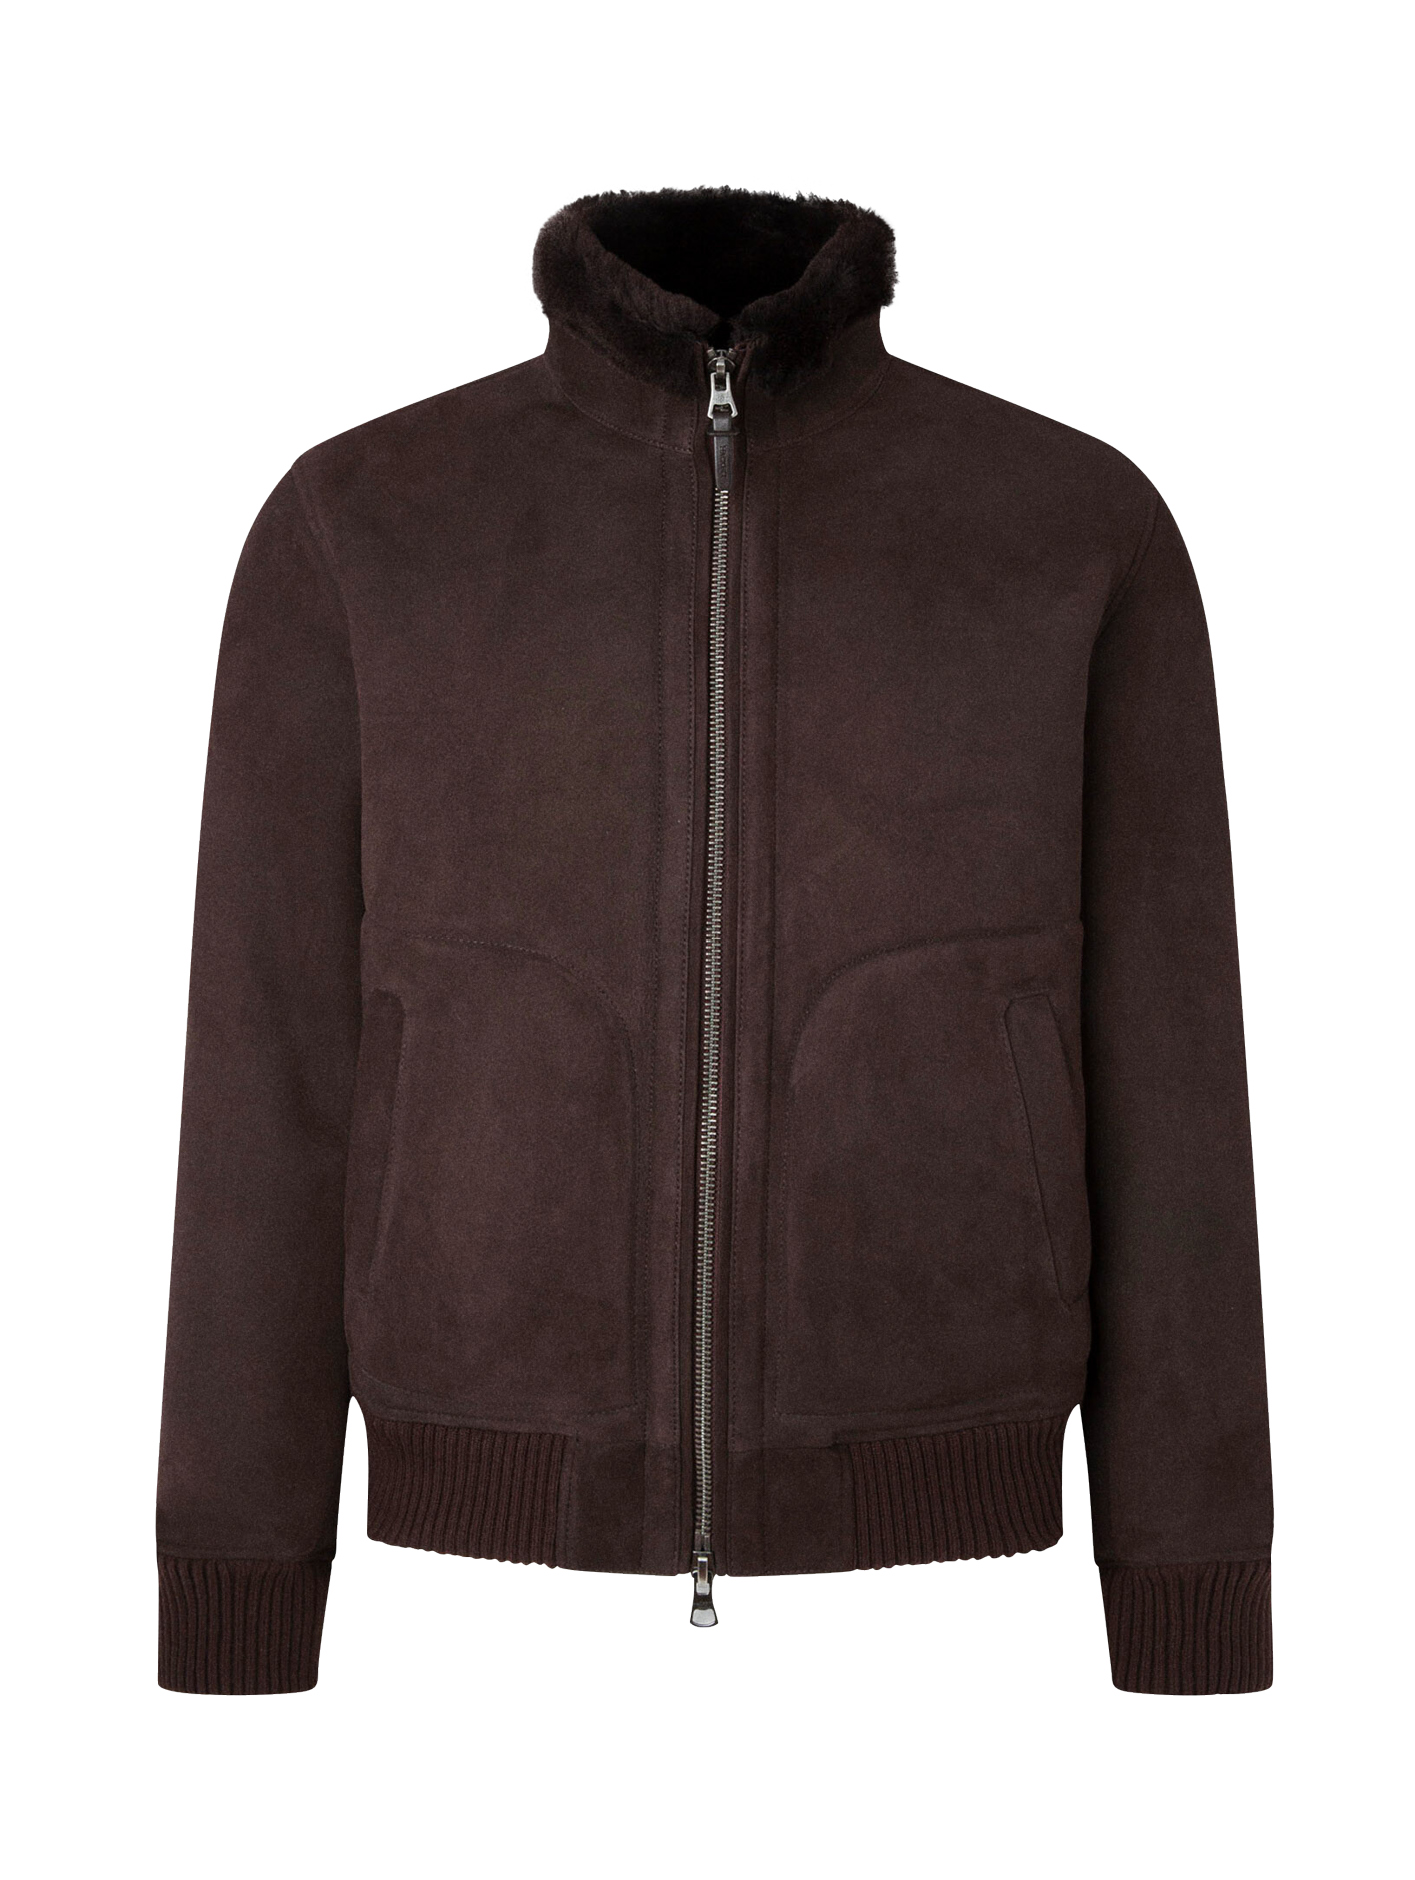 Shearling bomber jacket, £1,100